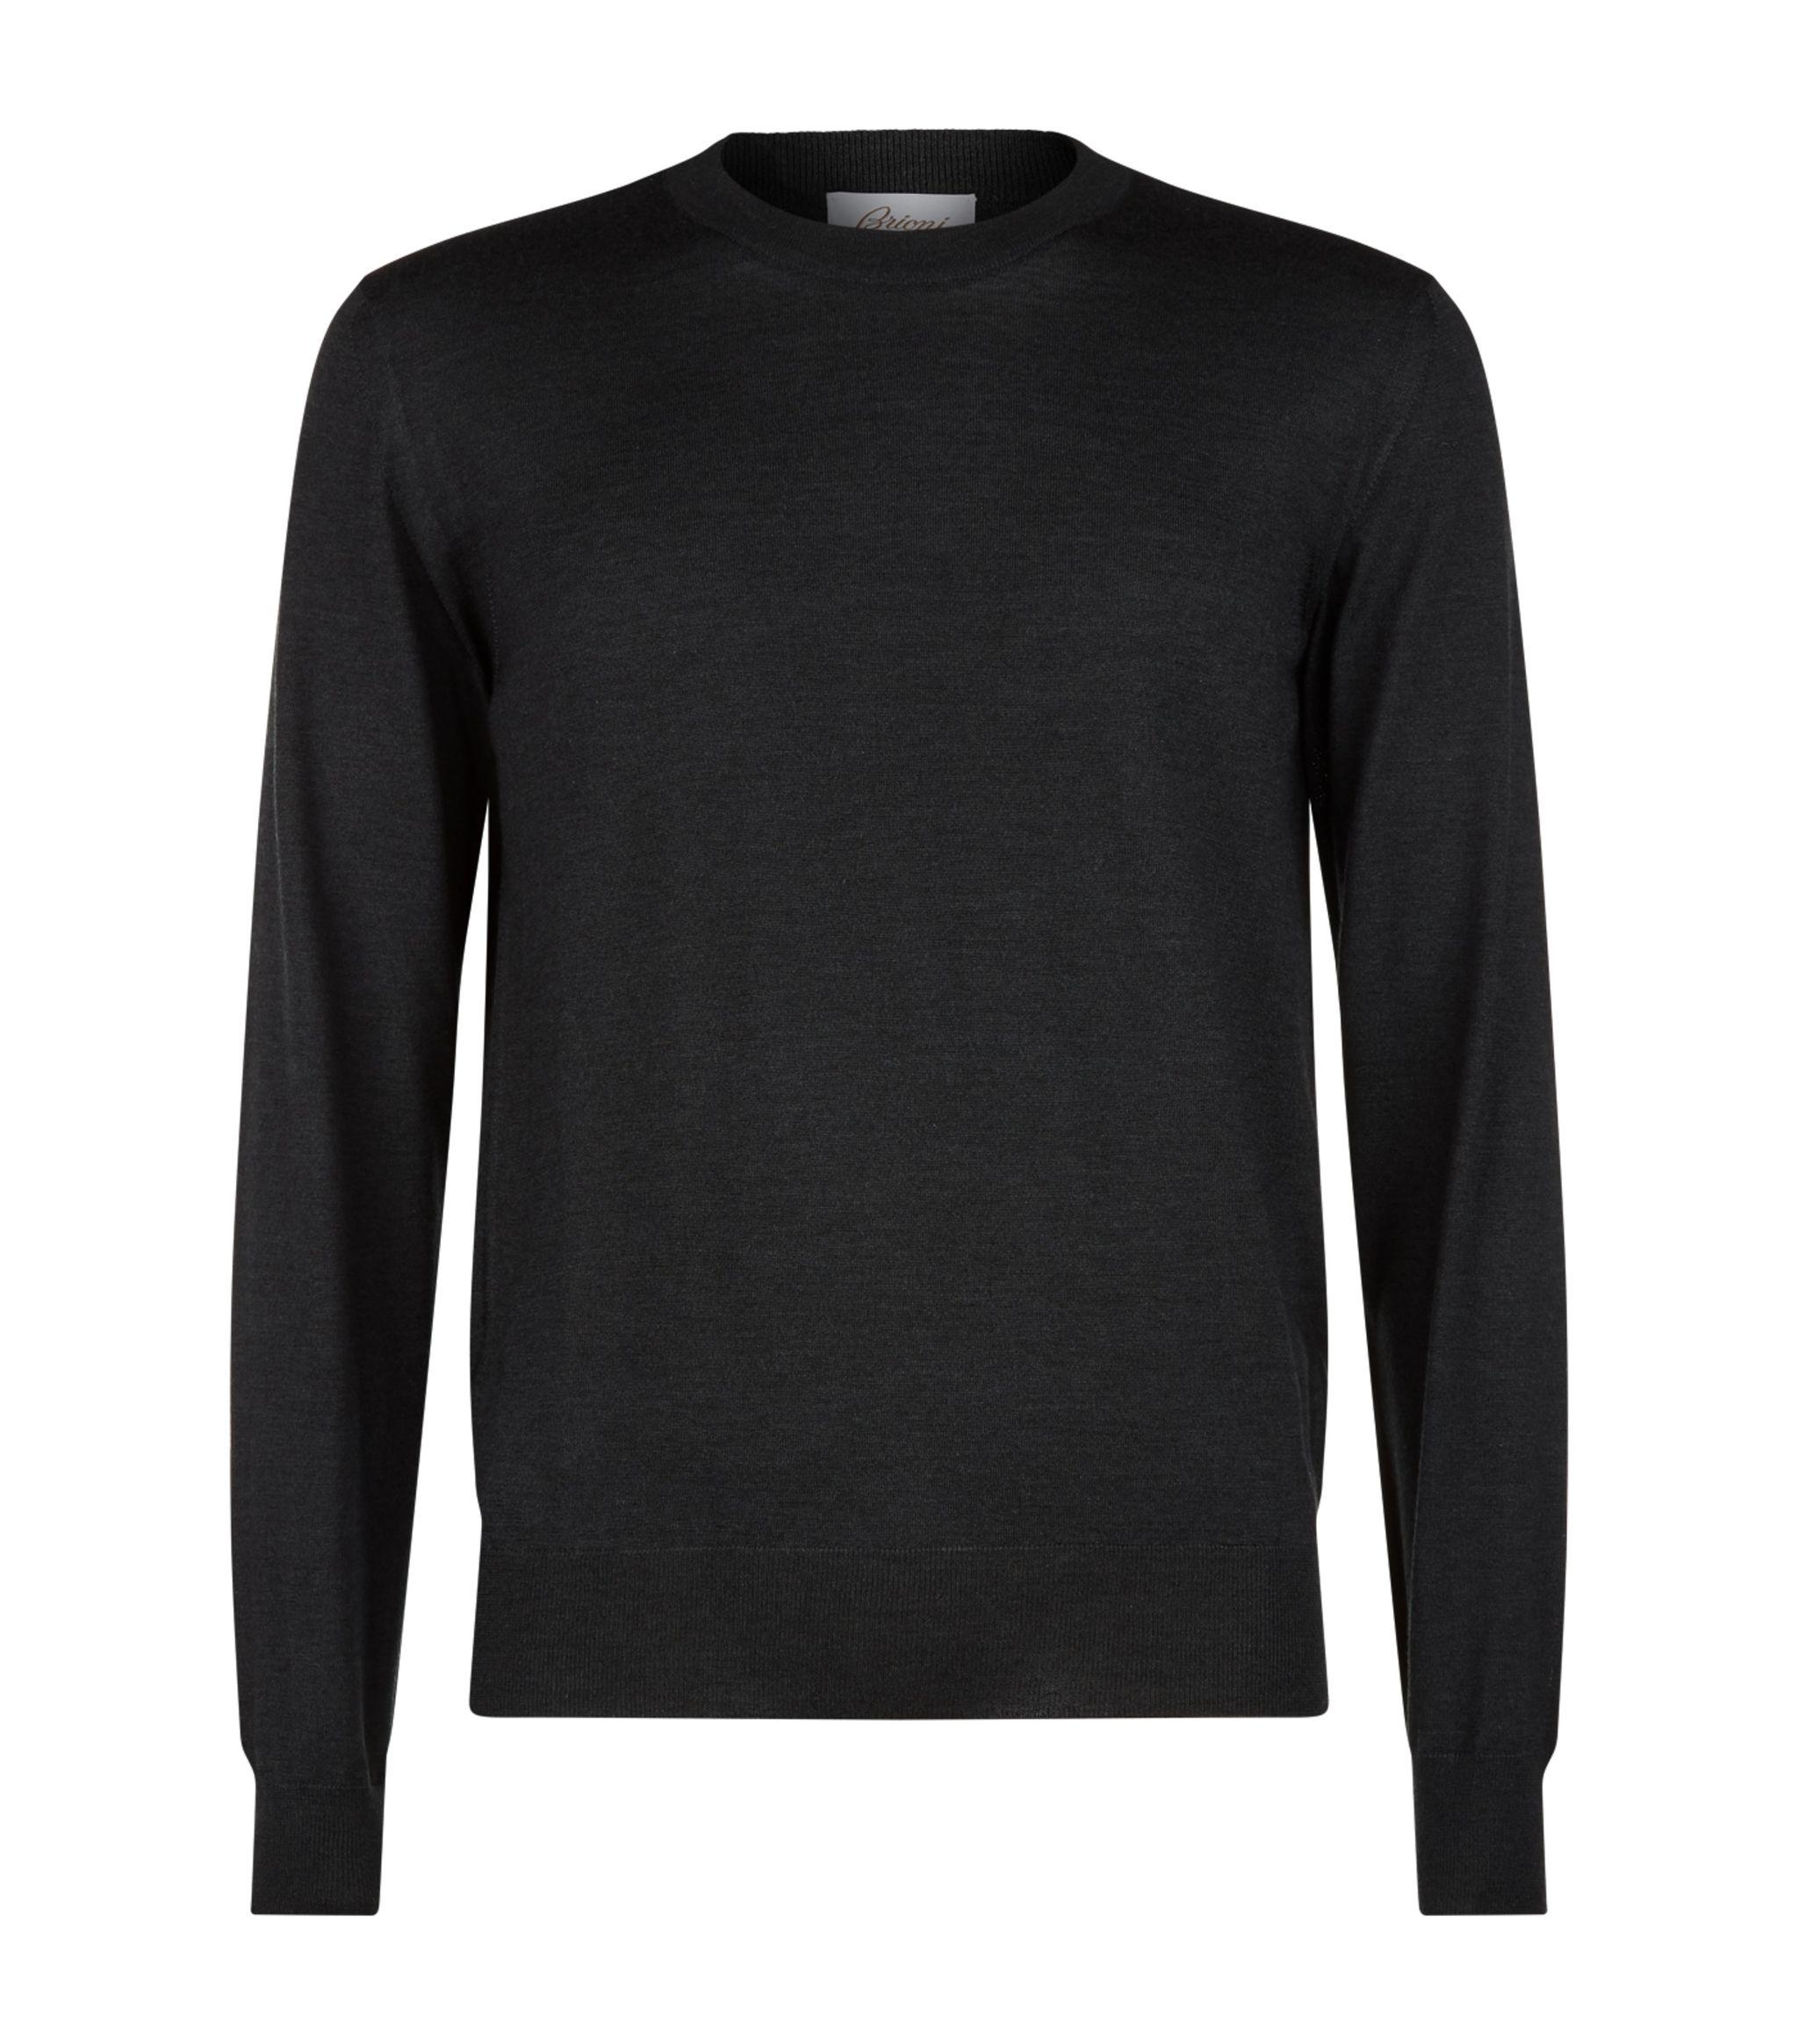 Brioni Wool Lightweight Crew Neck Sweater in Black for Men - Save 7% - Lyst